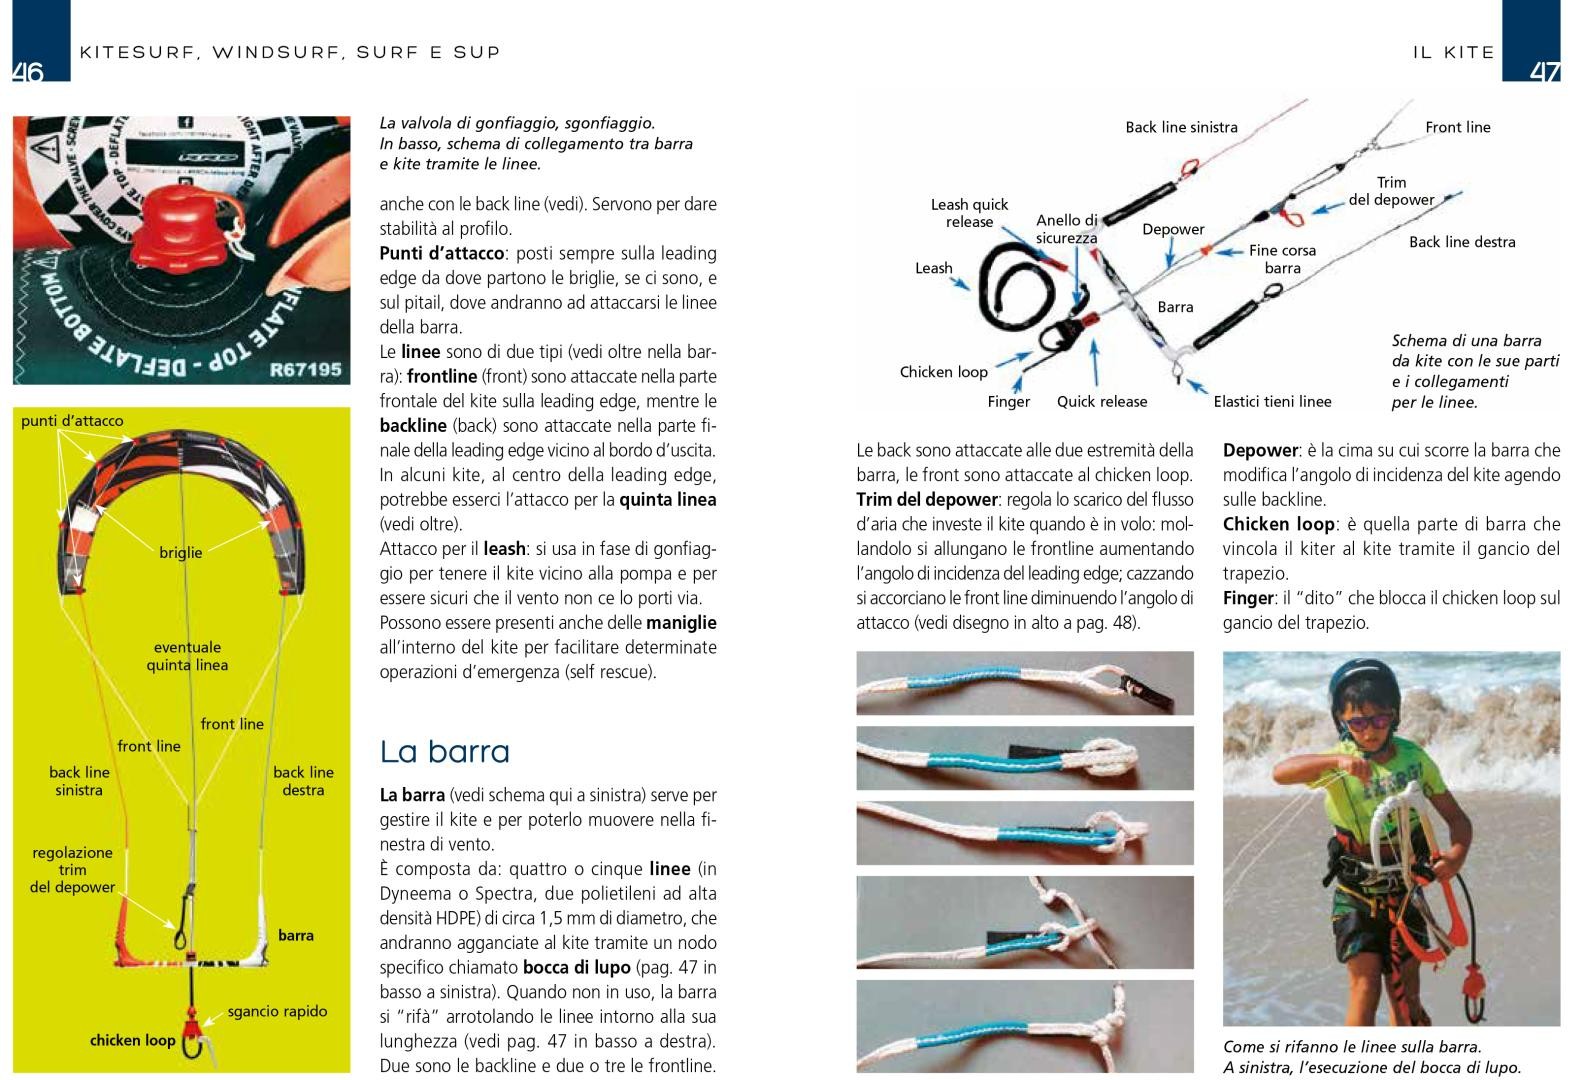 Estratto del manuale 'Kitesurf, Windsurf, Surf e Sup'